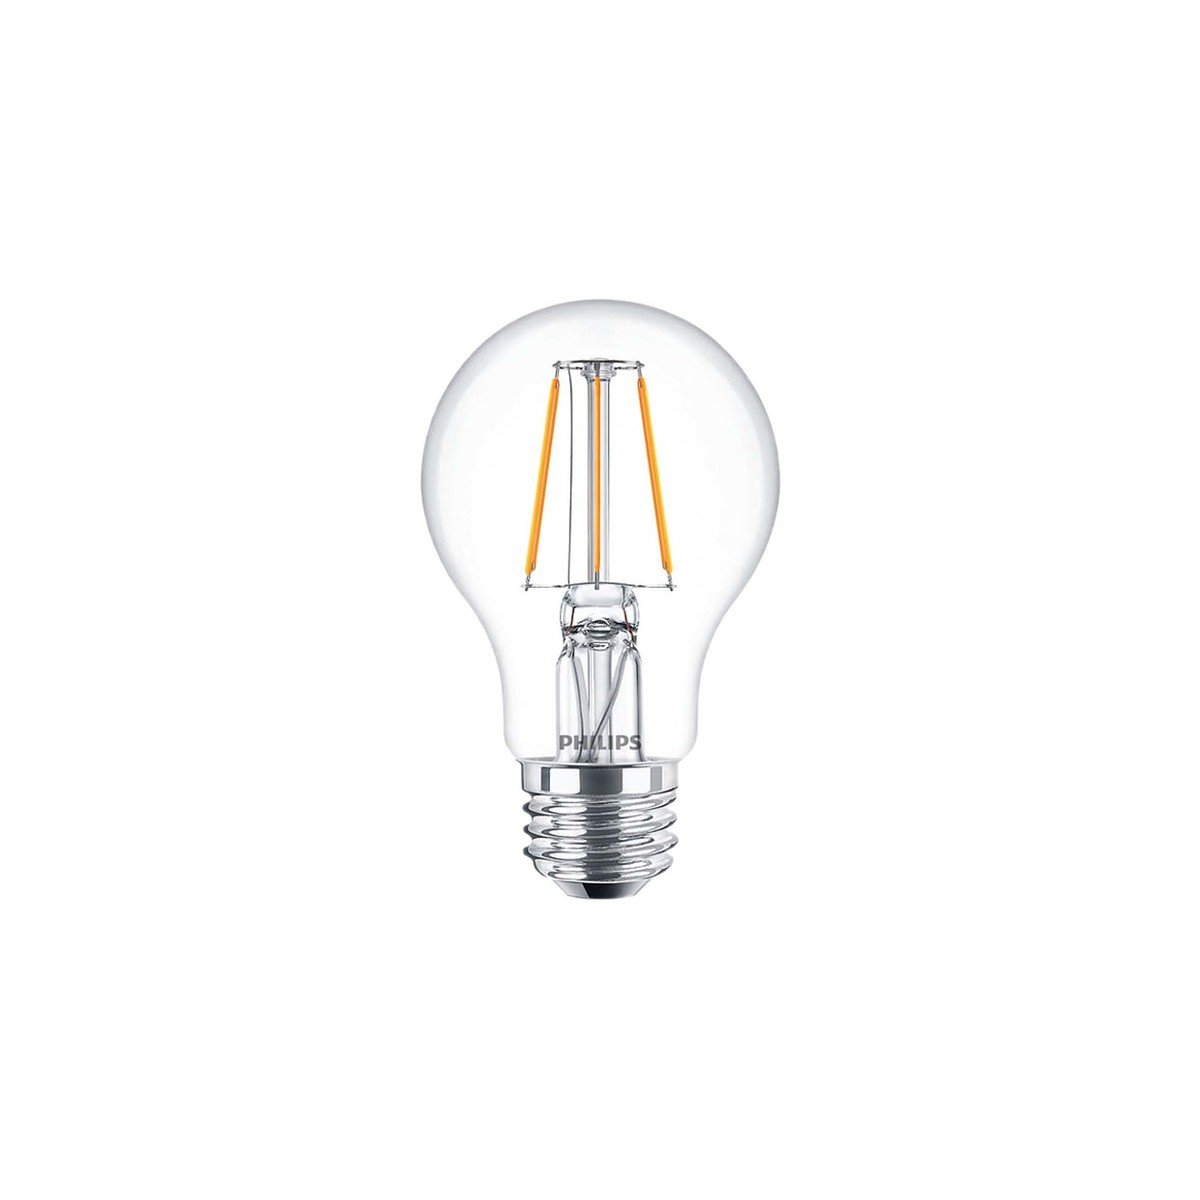 Philips LED Bulb 6W E27 865 CDL 2pcs